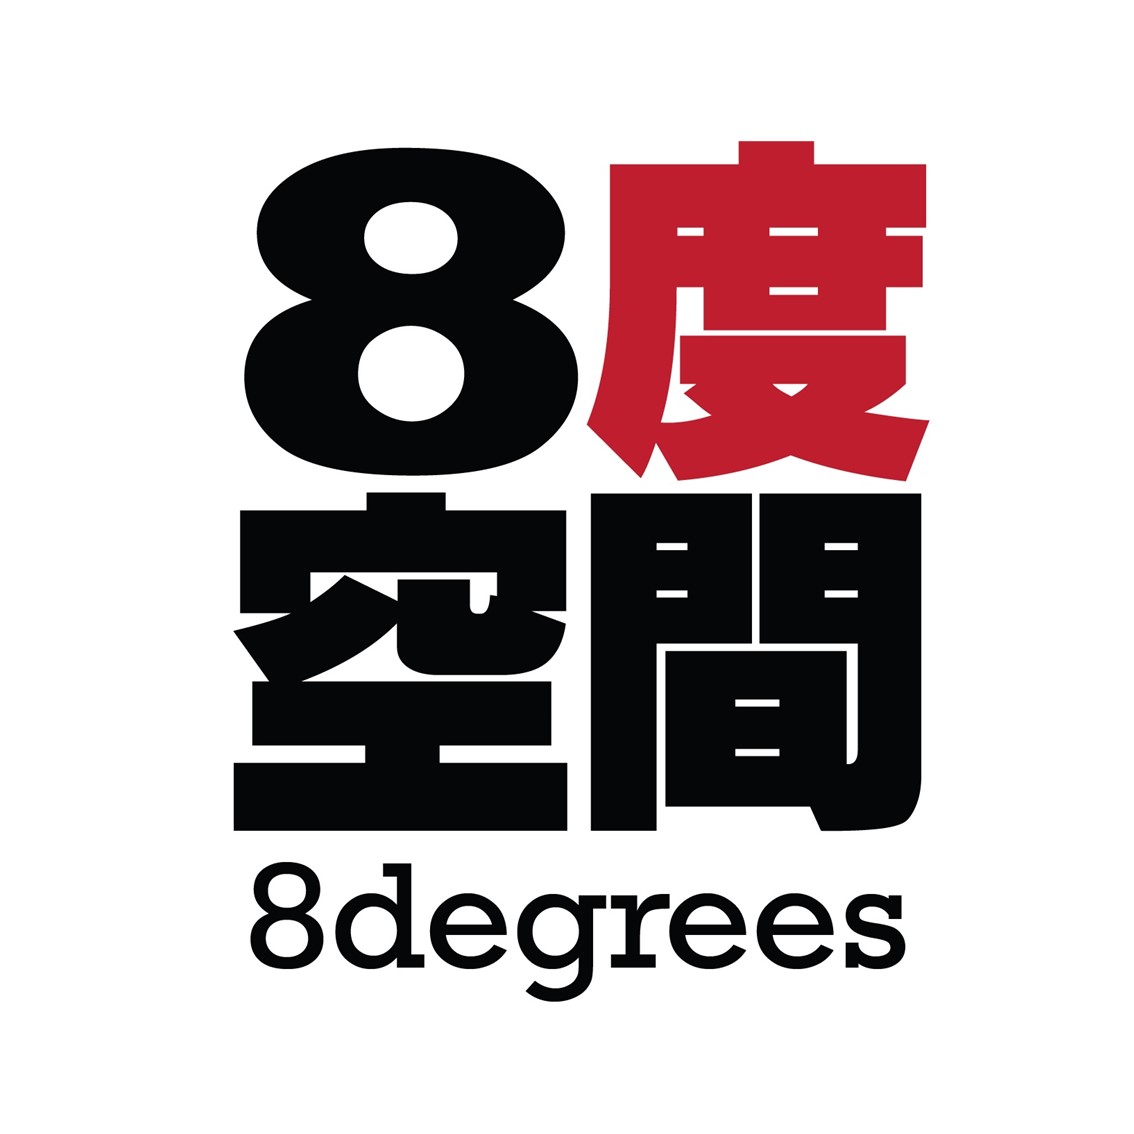 8 degrees  logo